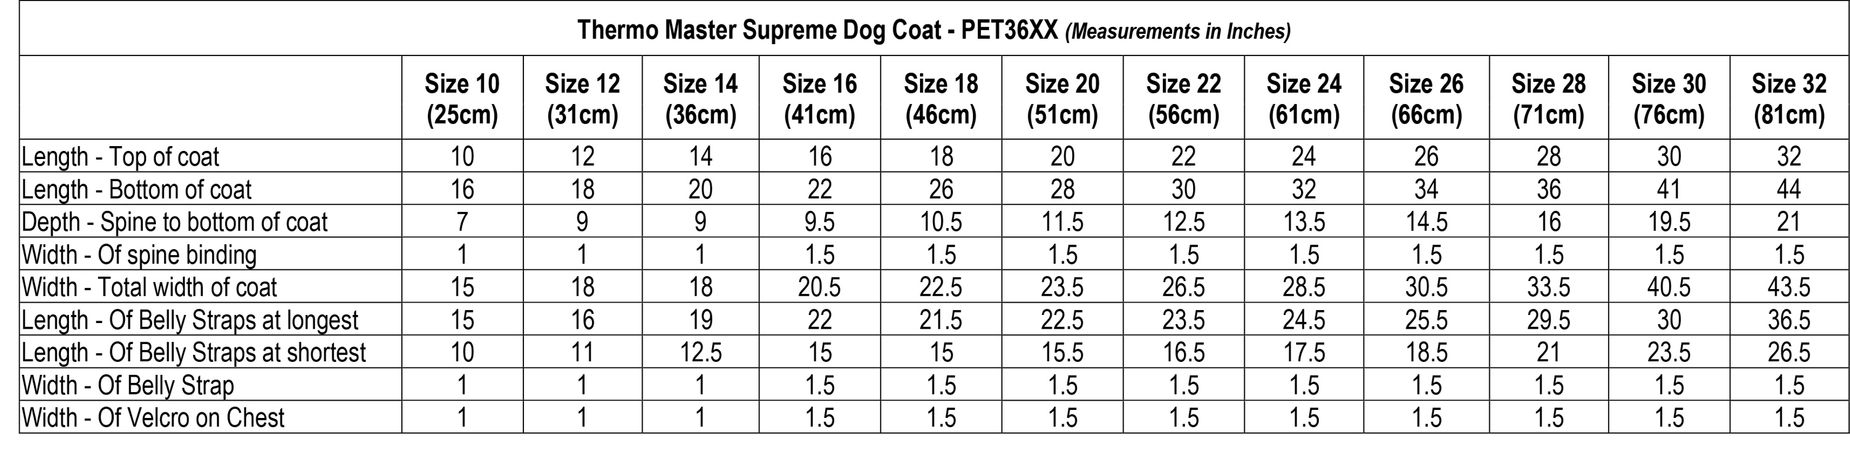 Thermo Master Supreme Dog Coat.jpg